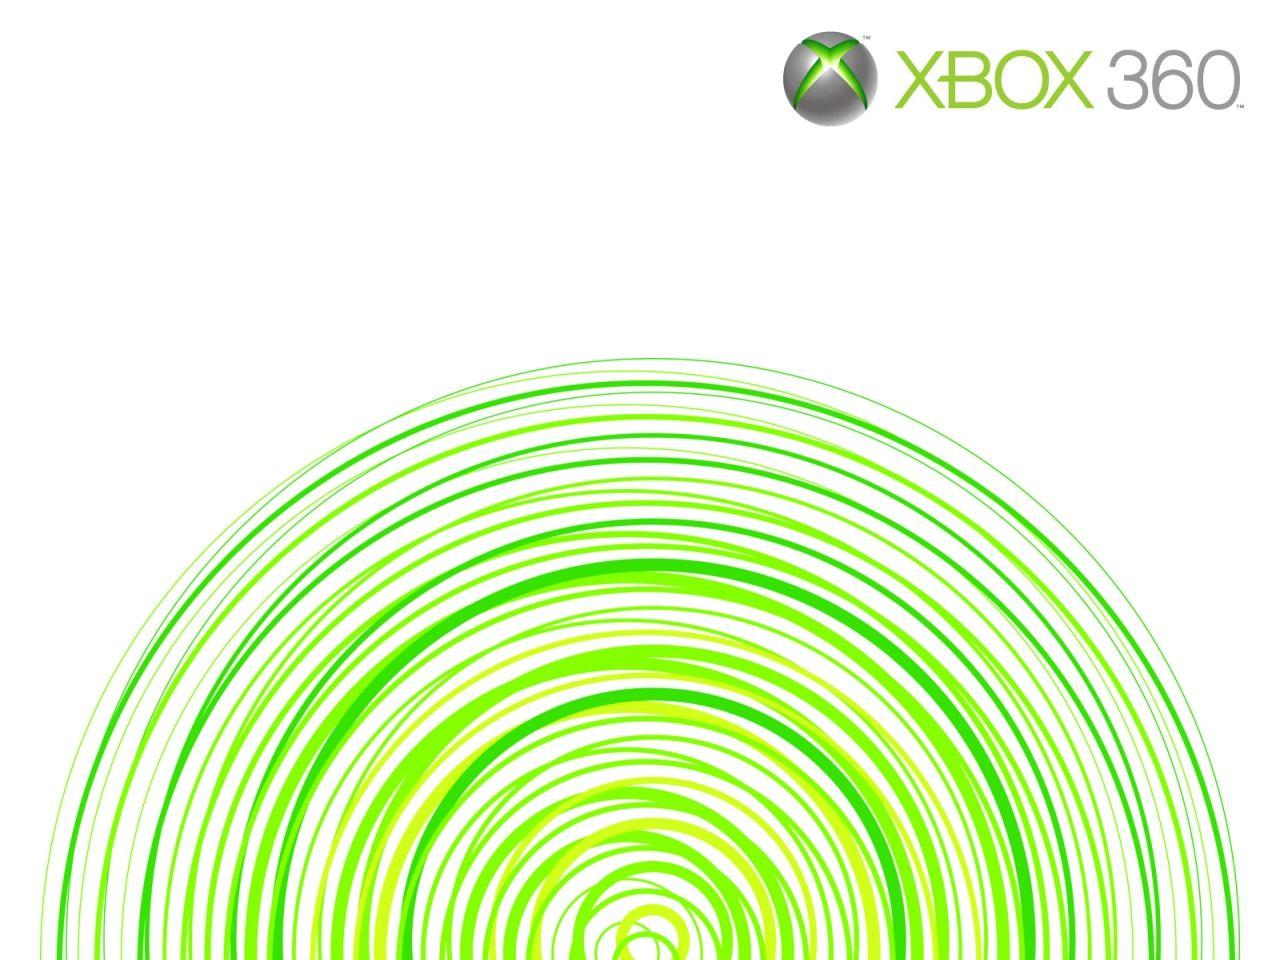 Xbox 360 Computer Wallpaper, Desktop Background.93 KB